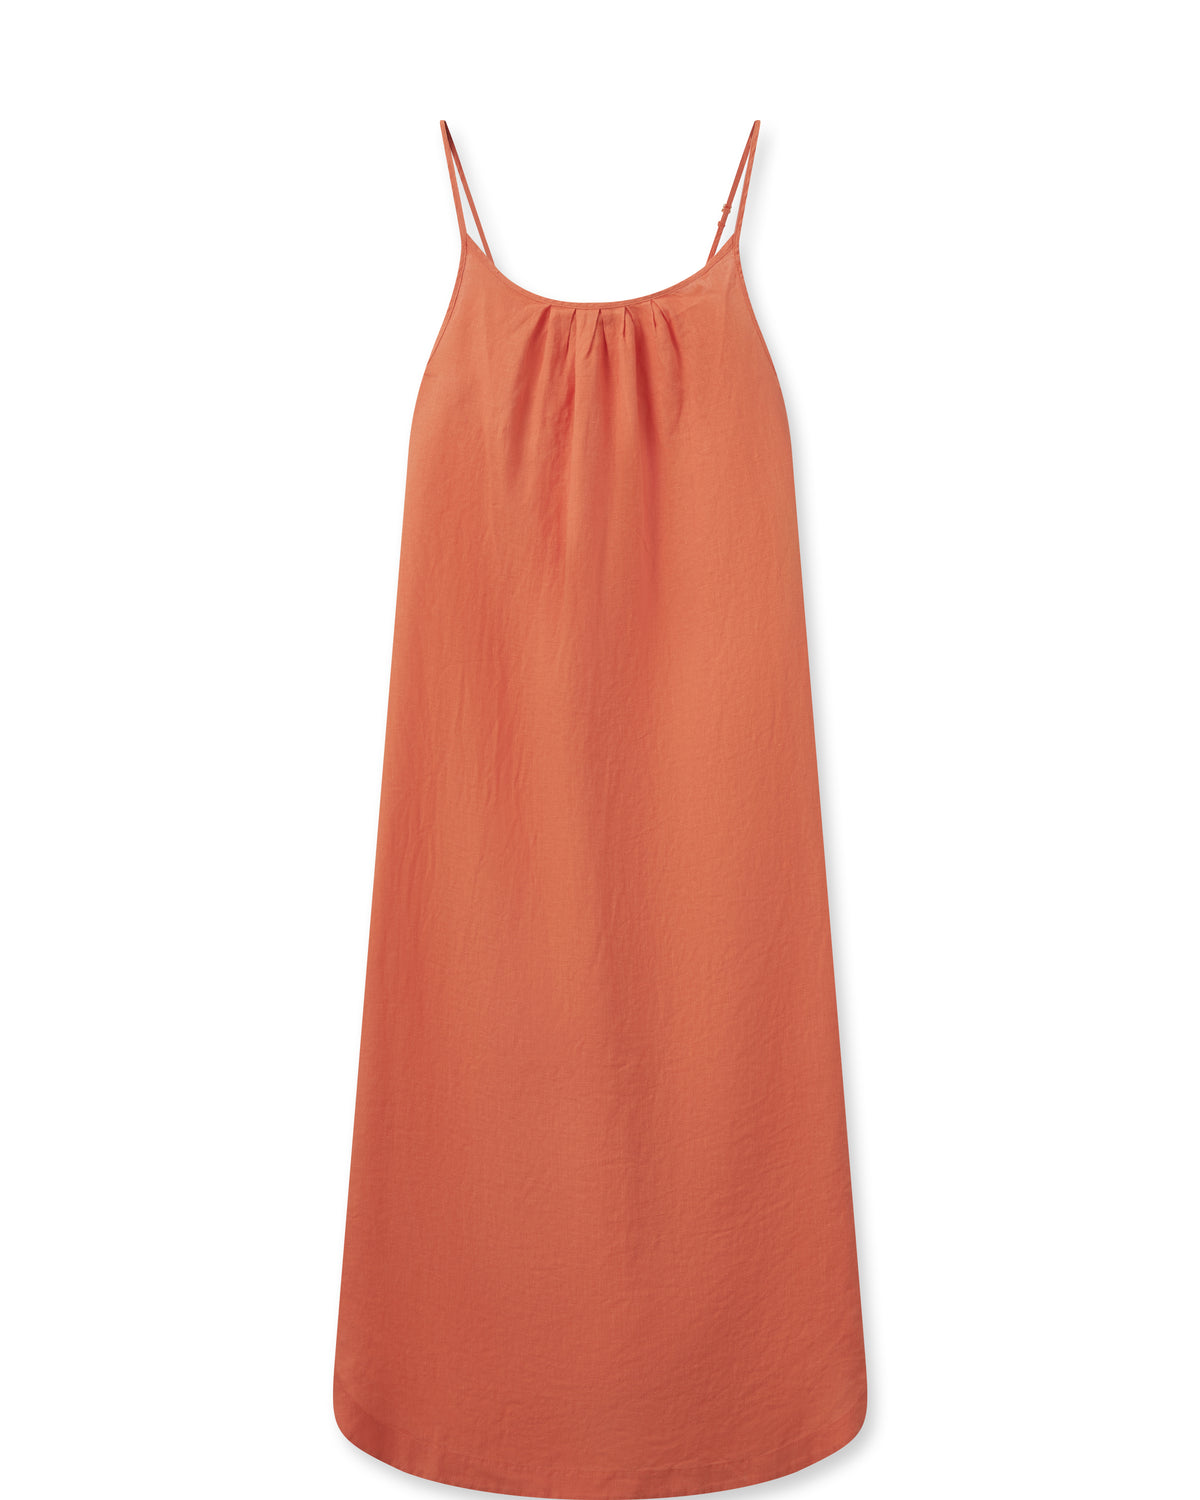 Hot orange linen dress with spaghetti straps and a shaped hem